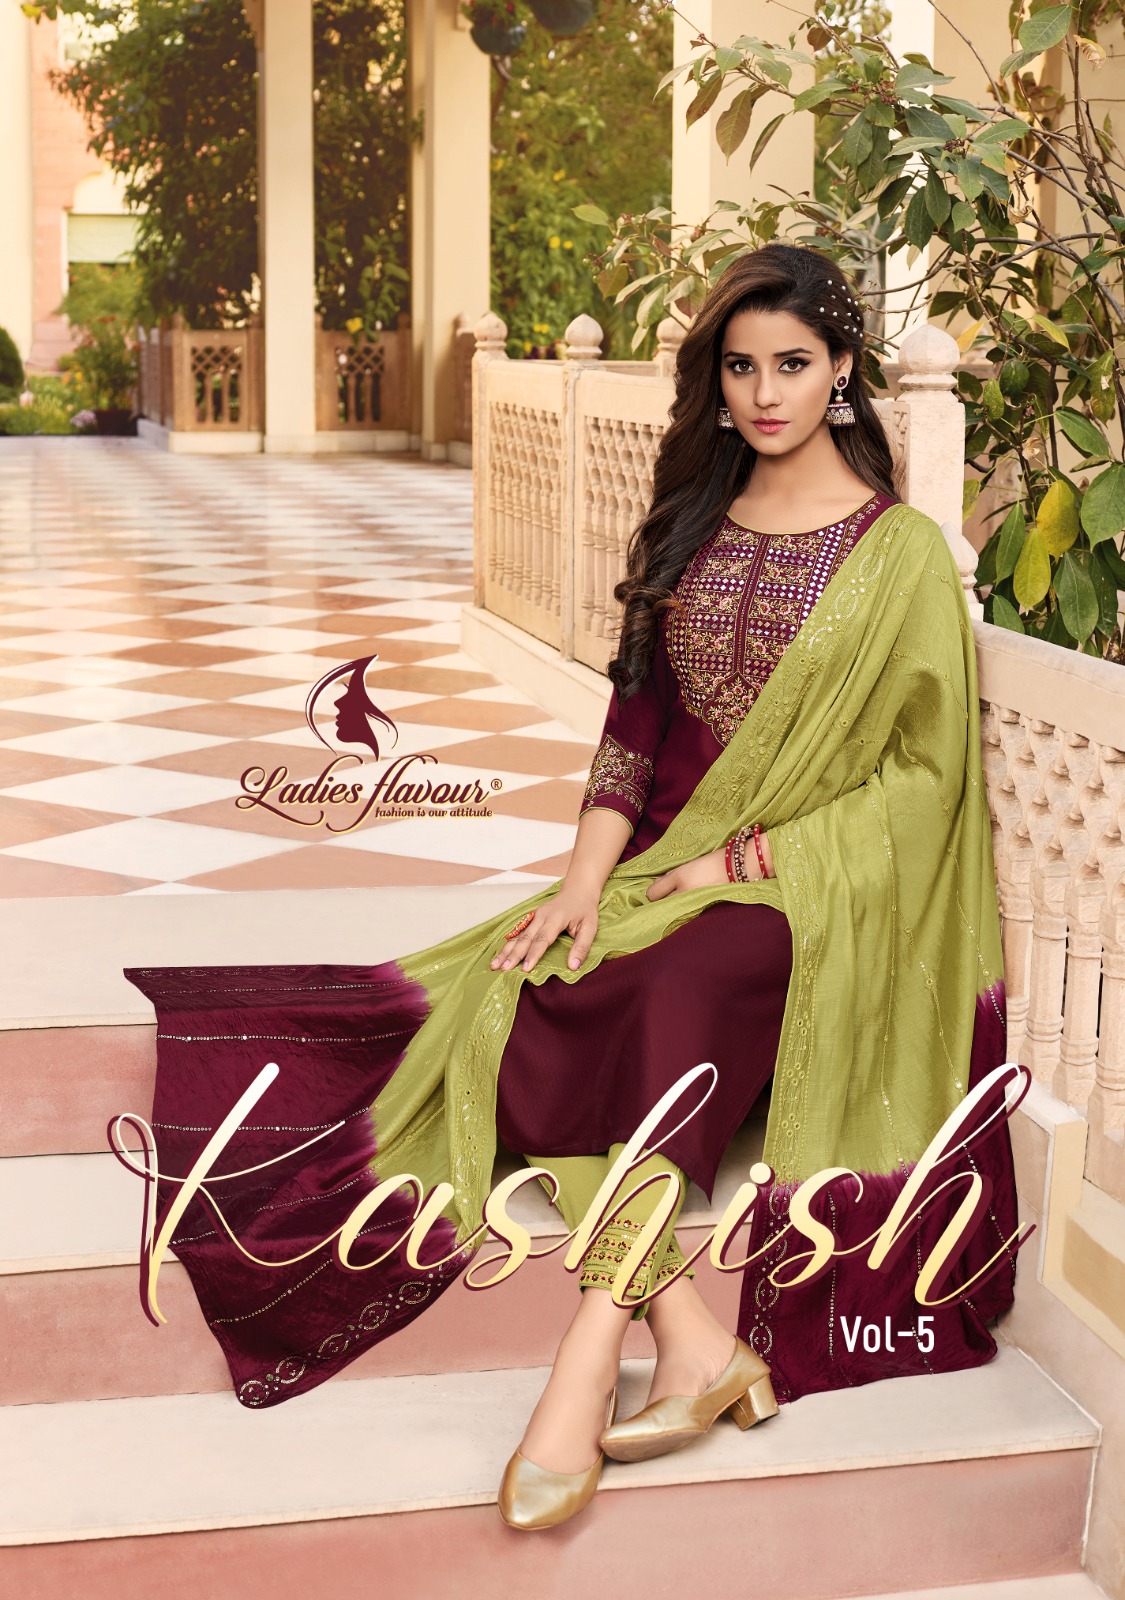 Ladies Flavour Kashish Vol 5 collection 8